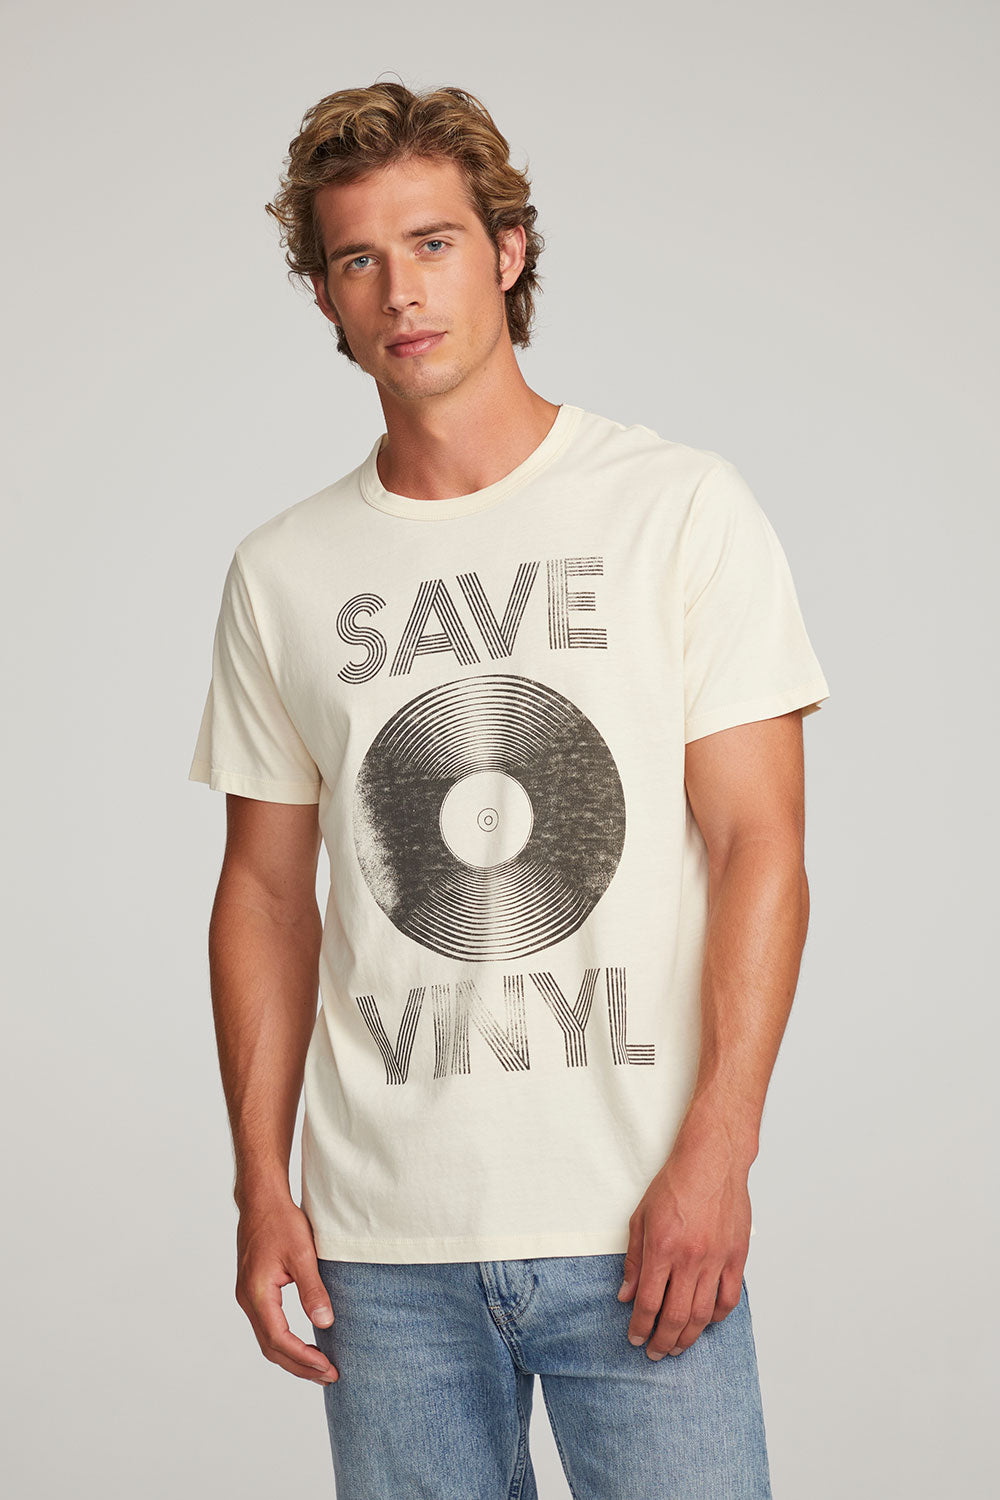 Save Vinyl Mens Tee MENS chaserbrand